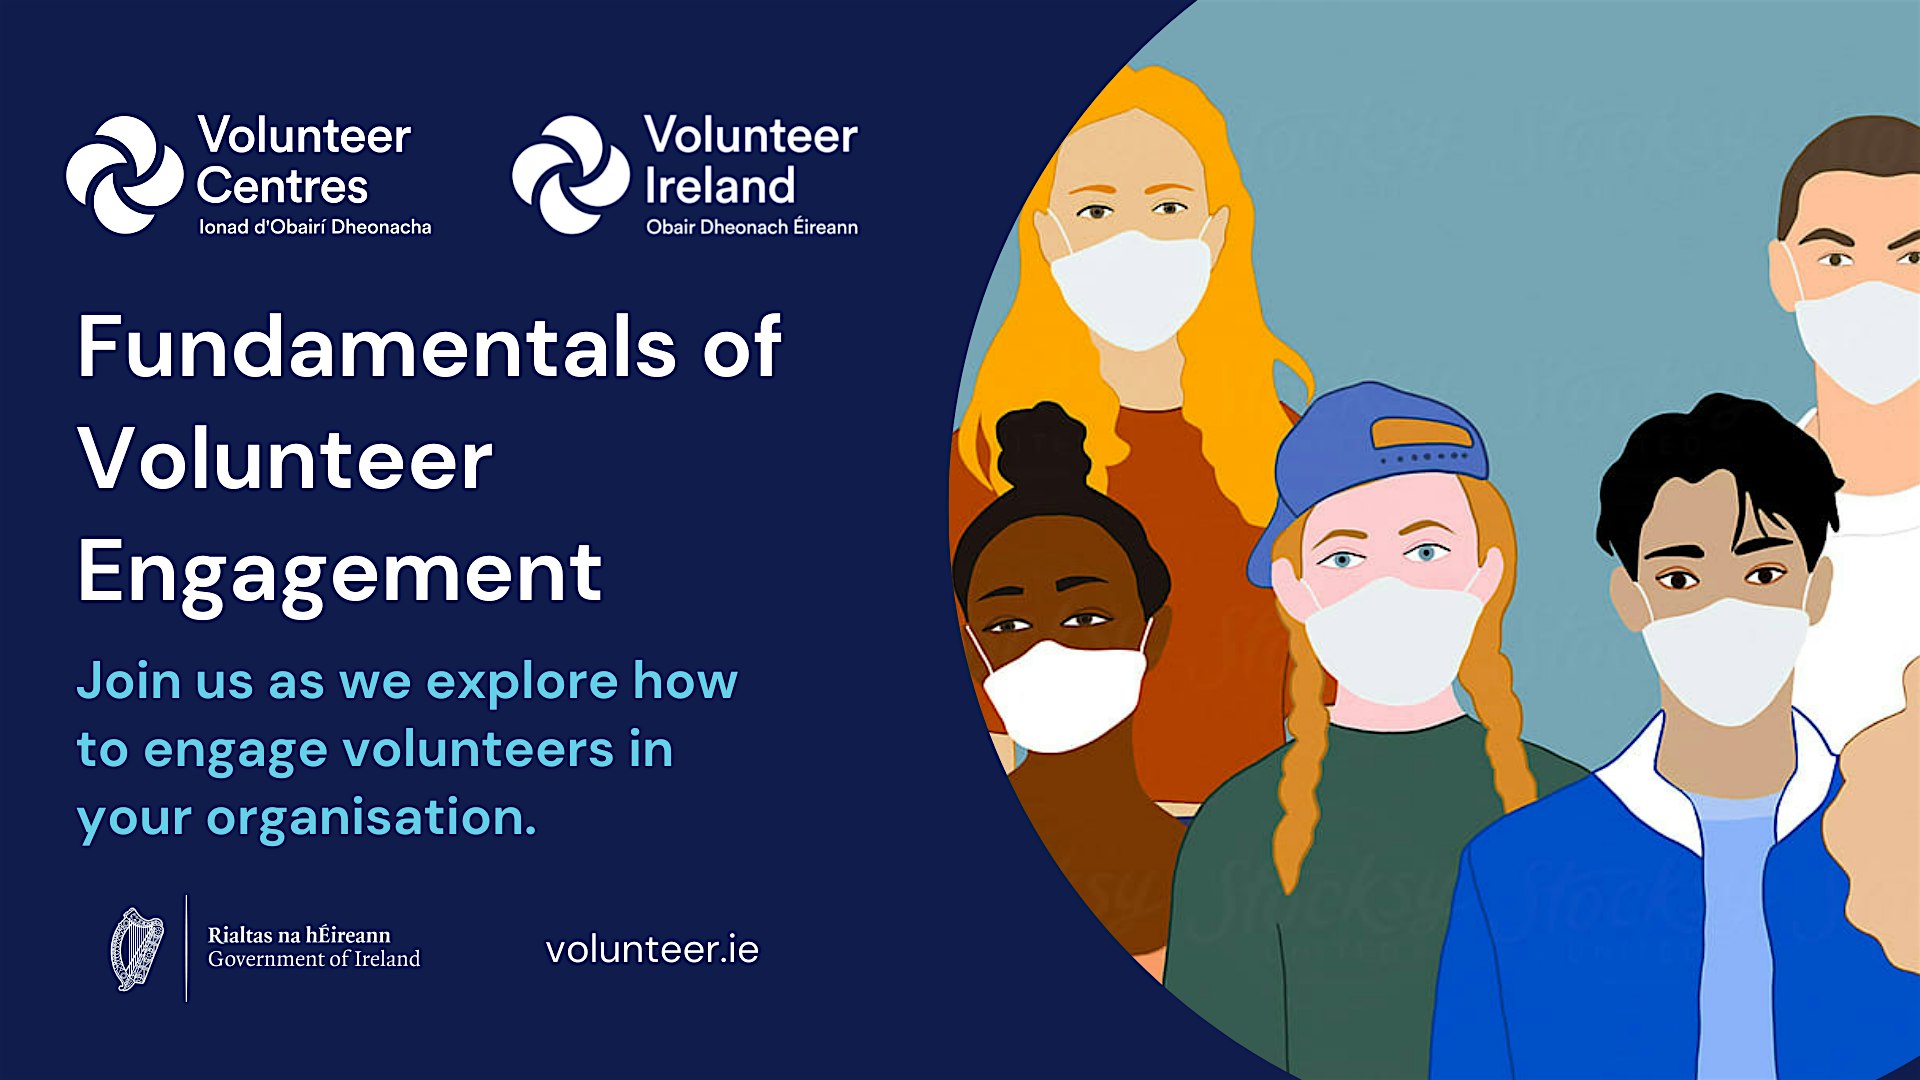 Fundamentals of Volunteer Engagement (Saturday Sep 24th & Oct 8th)